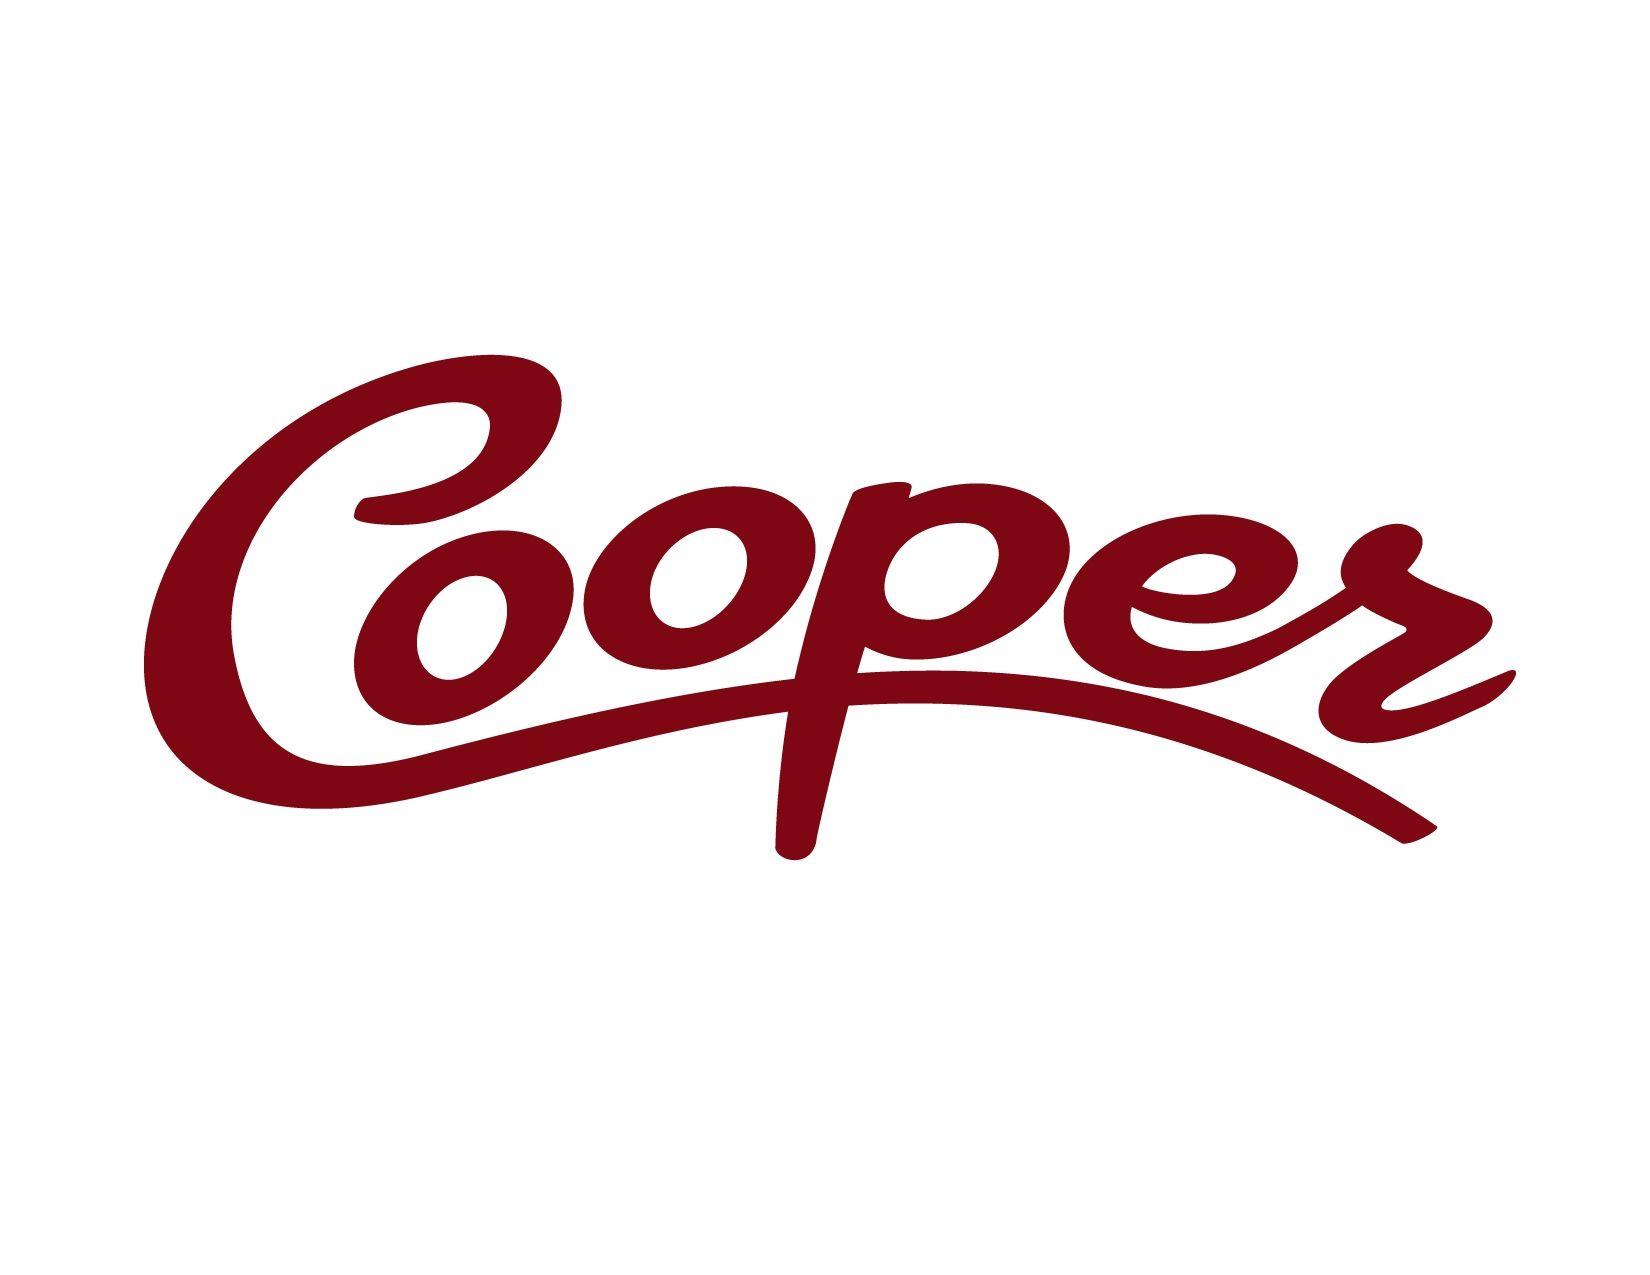 Cooper Logo - Cooper Logos